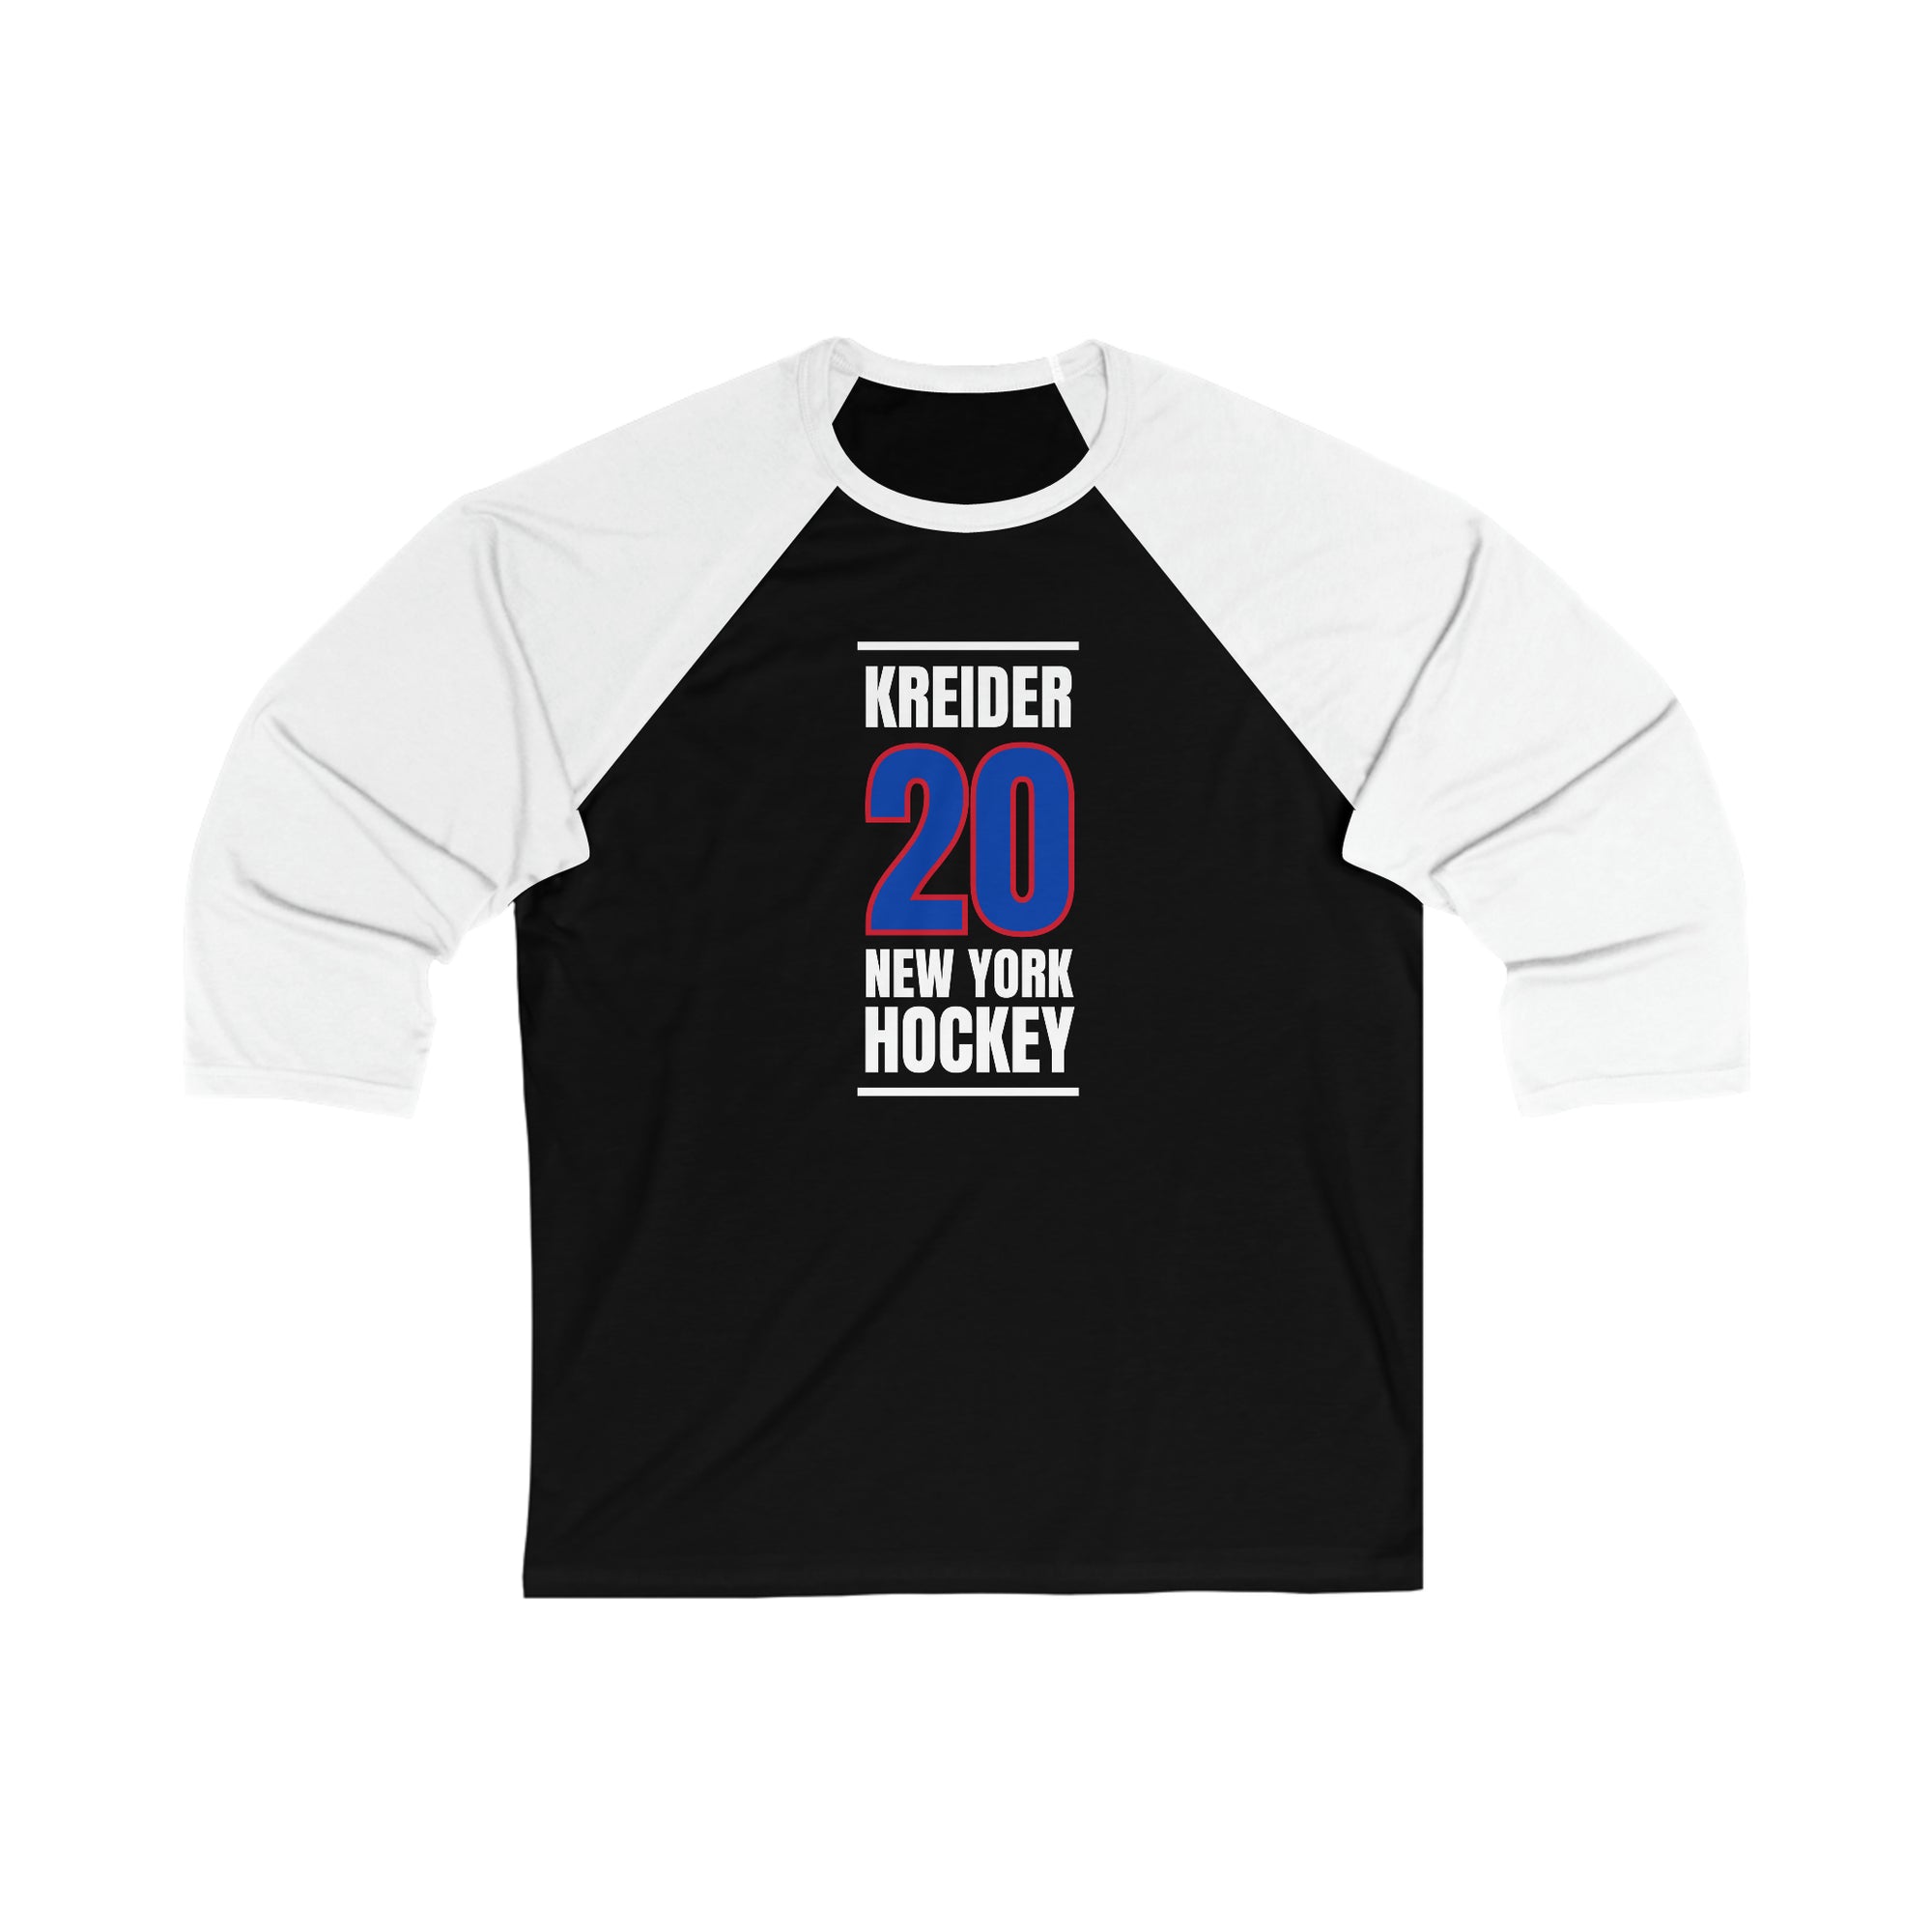 Kreider 20 New York Hockey Royal Blue Vertical Design Unisex Tri-Blend 3/4 Sleeve Raglan Baseball Shirt